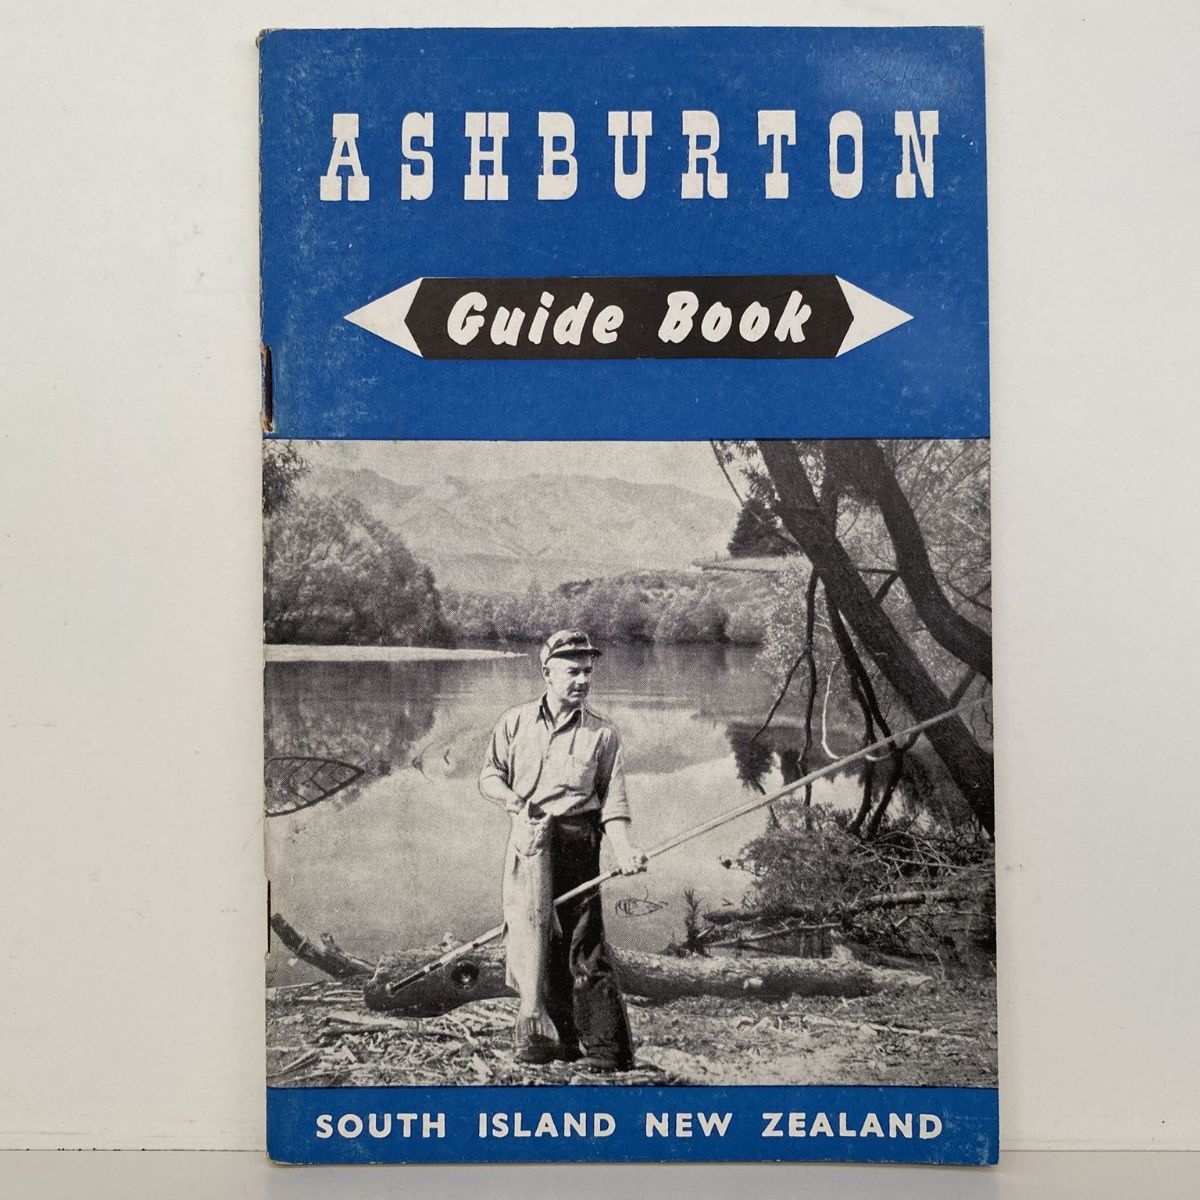 ASHBURTON Guide Book